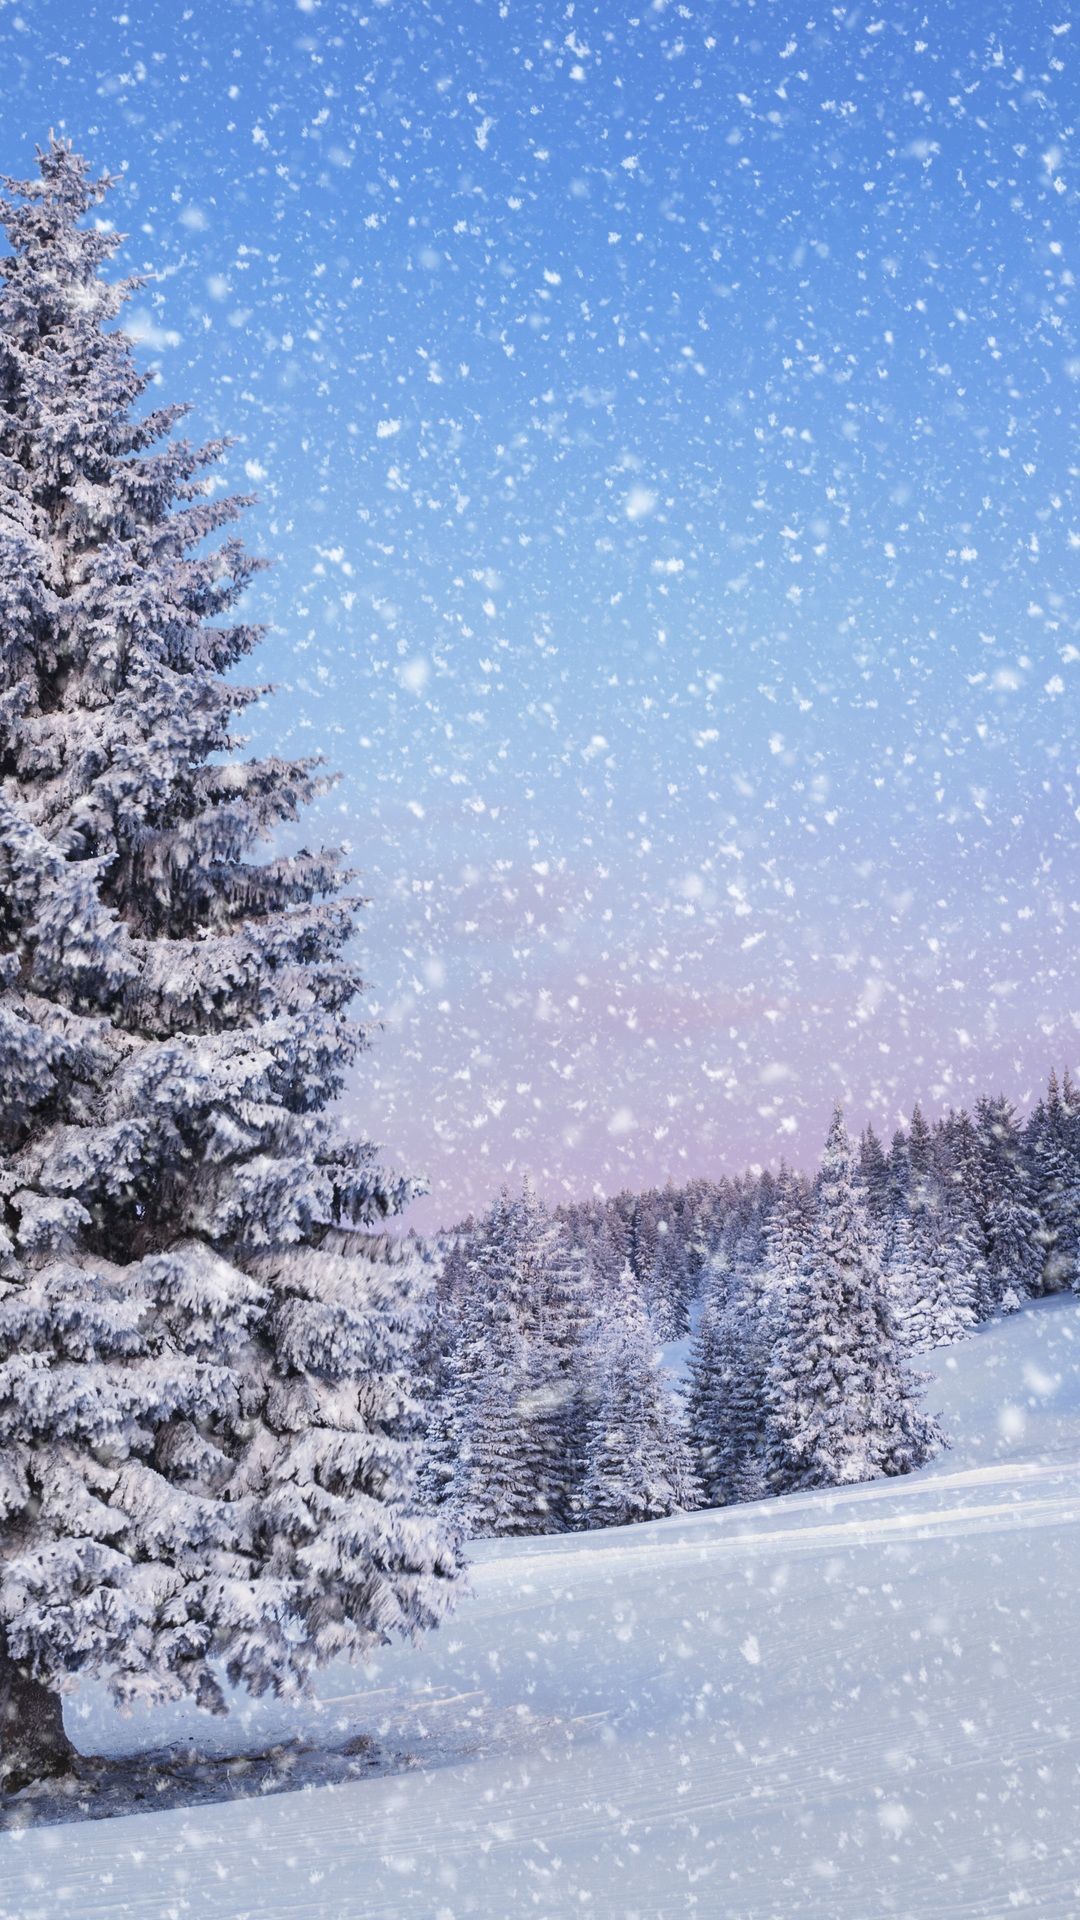 1080x1920 Winter Iphone Wallpaper, Tree Wallpaper, Desktop Backgrounds, Desktop  Wallpapers, Winter Time, Winter Wonderland, Desktop Background Images